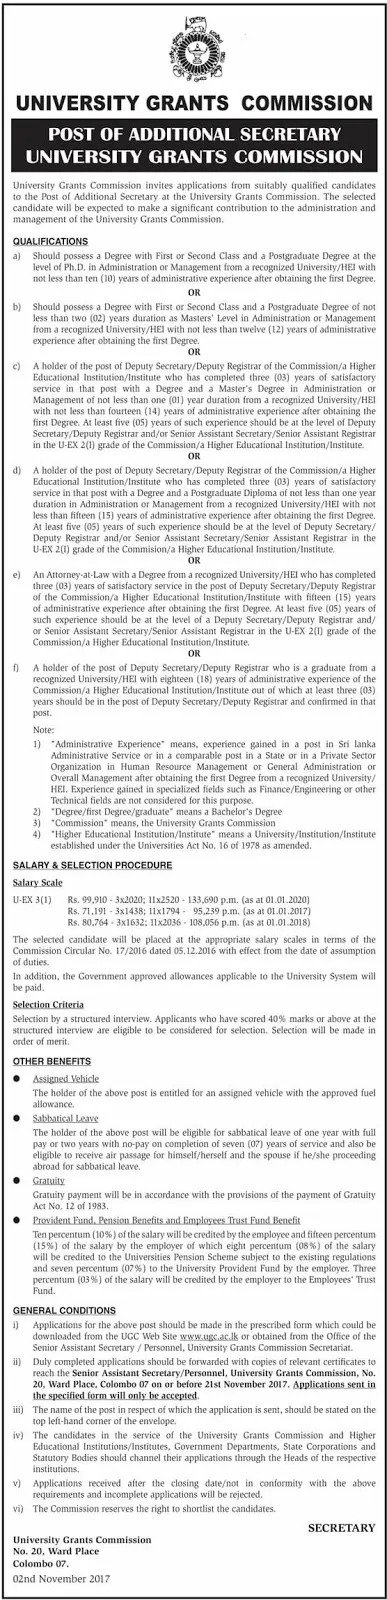 University Grants Commission Vacancies for Secretary / Director